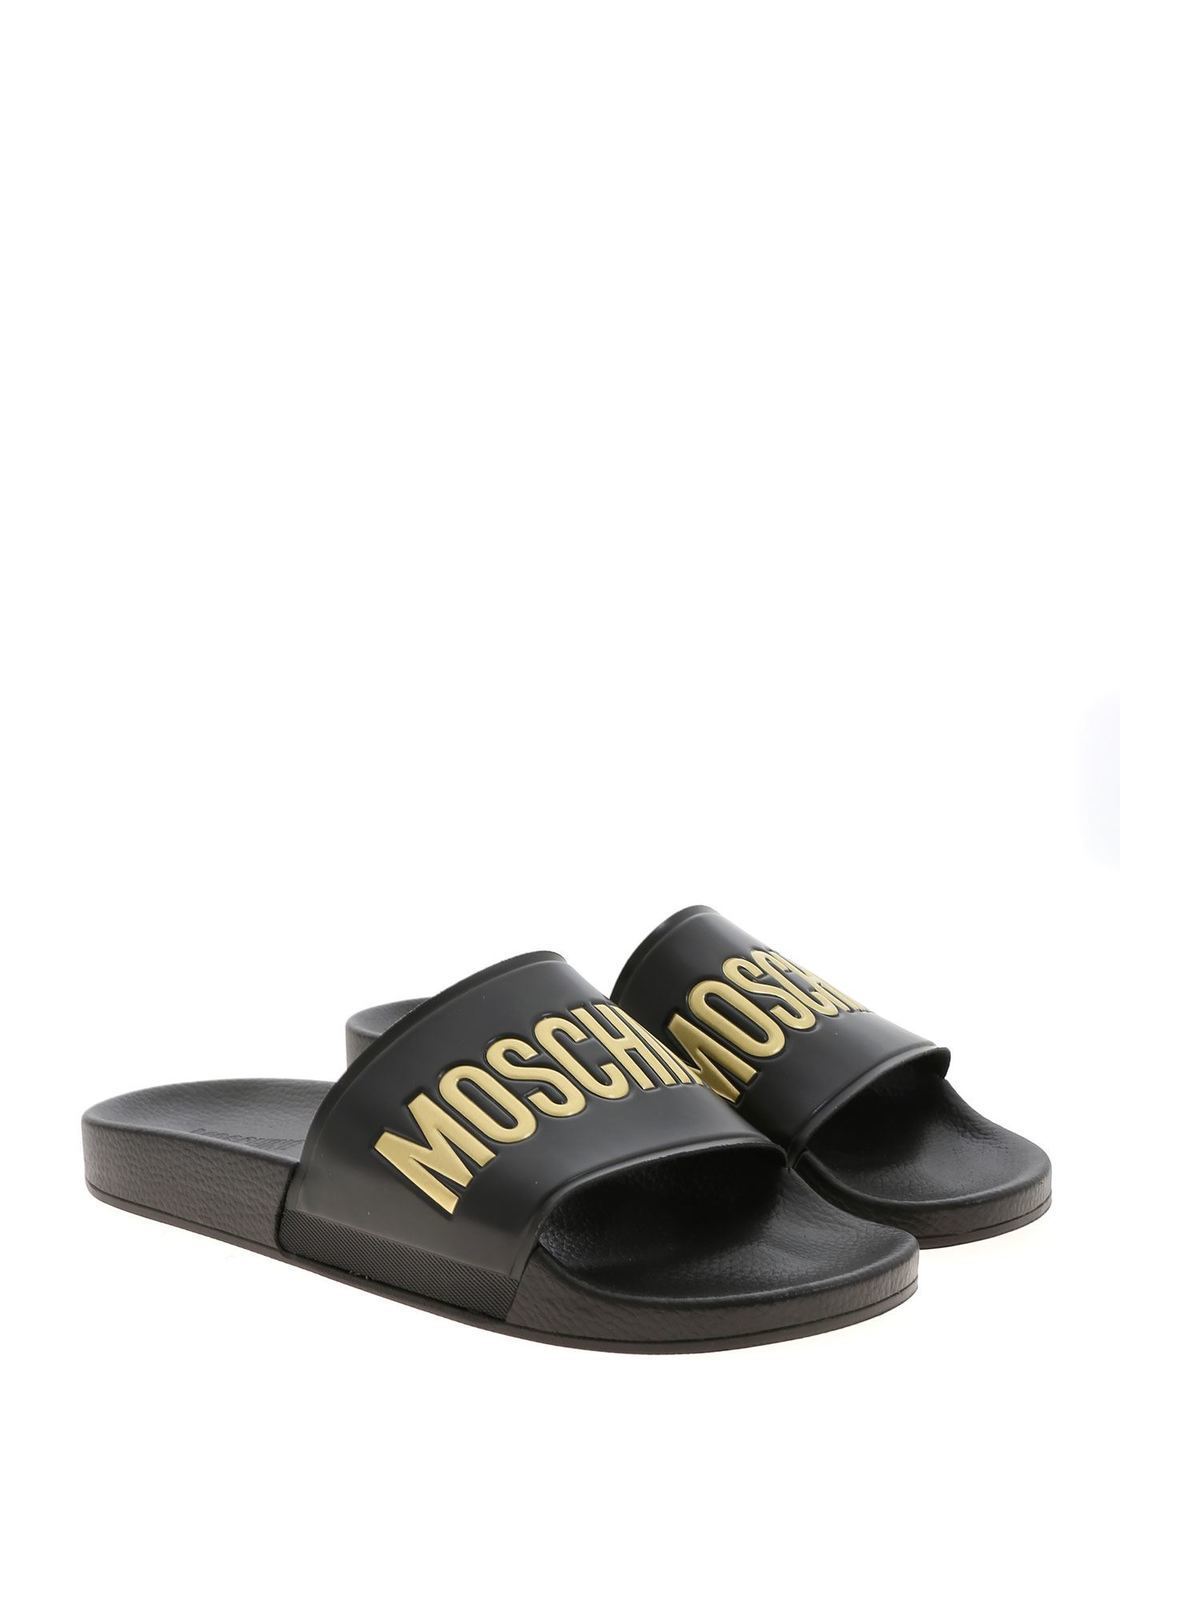 Moschino - Golden logo slippers in 